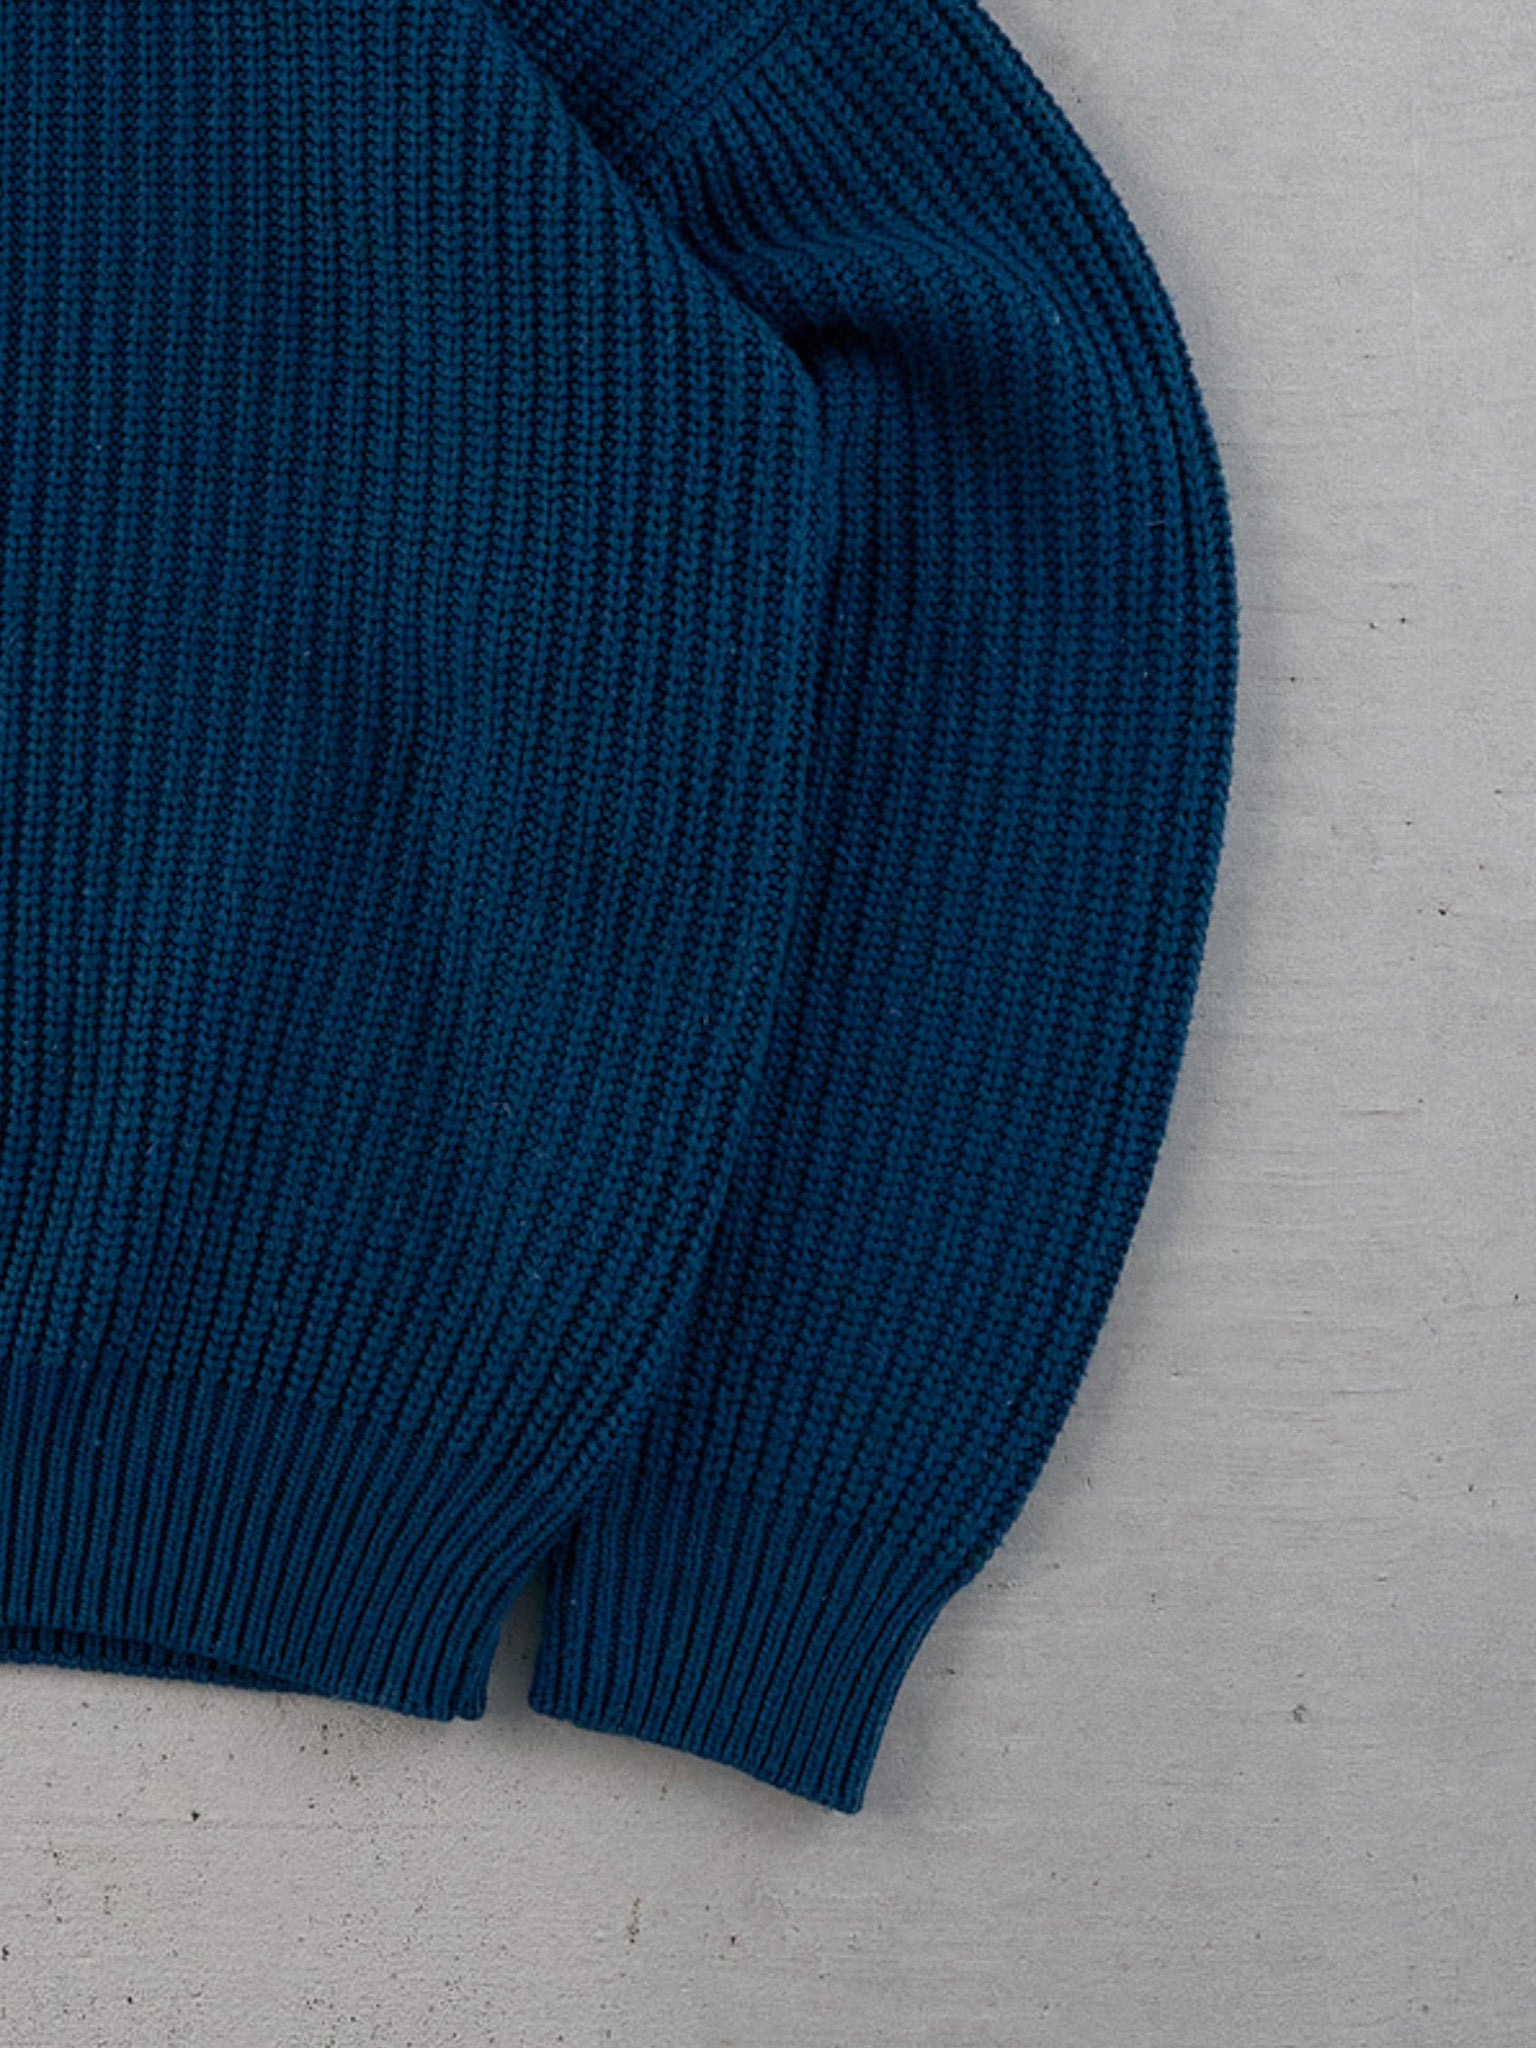 Vintage 70s Teal Blue Sears Knit Sweater (M/L)